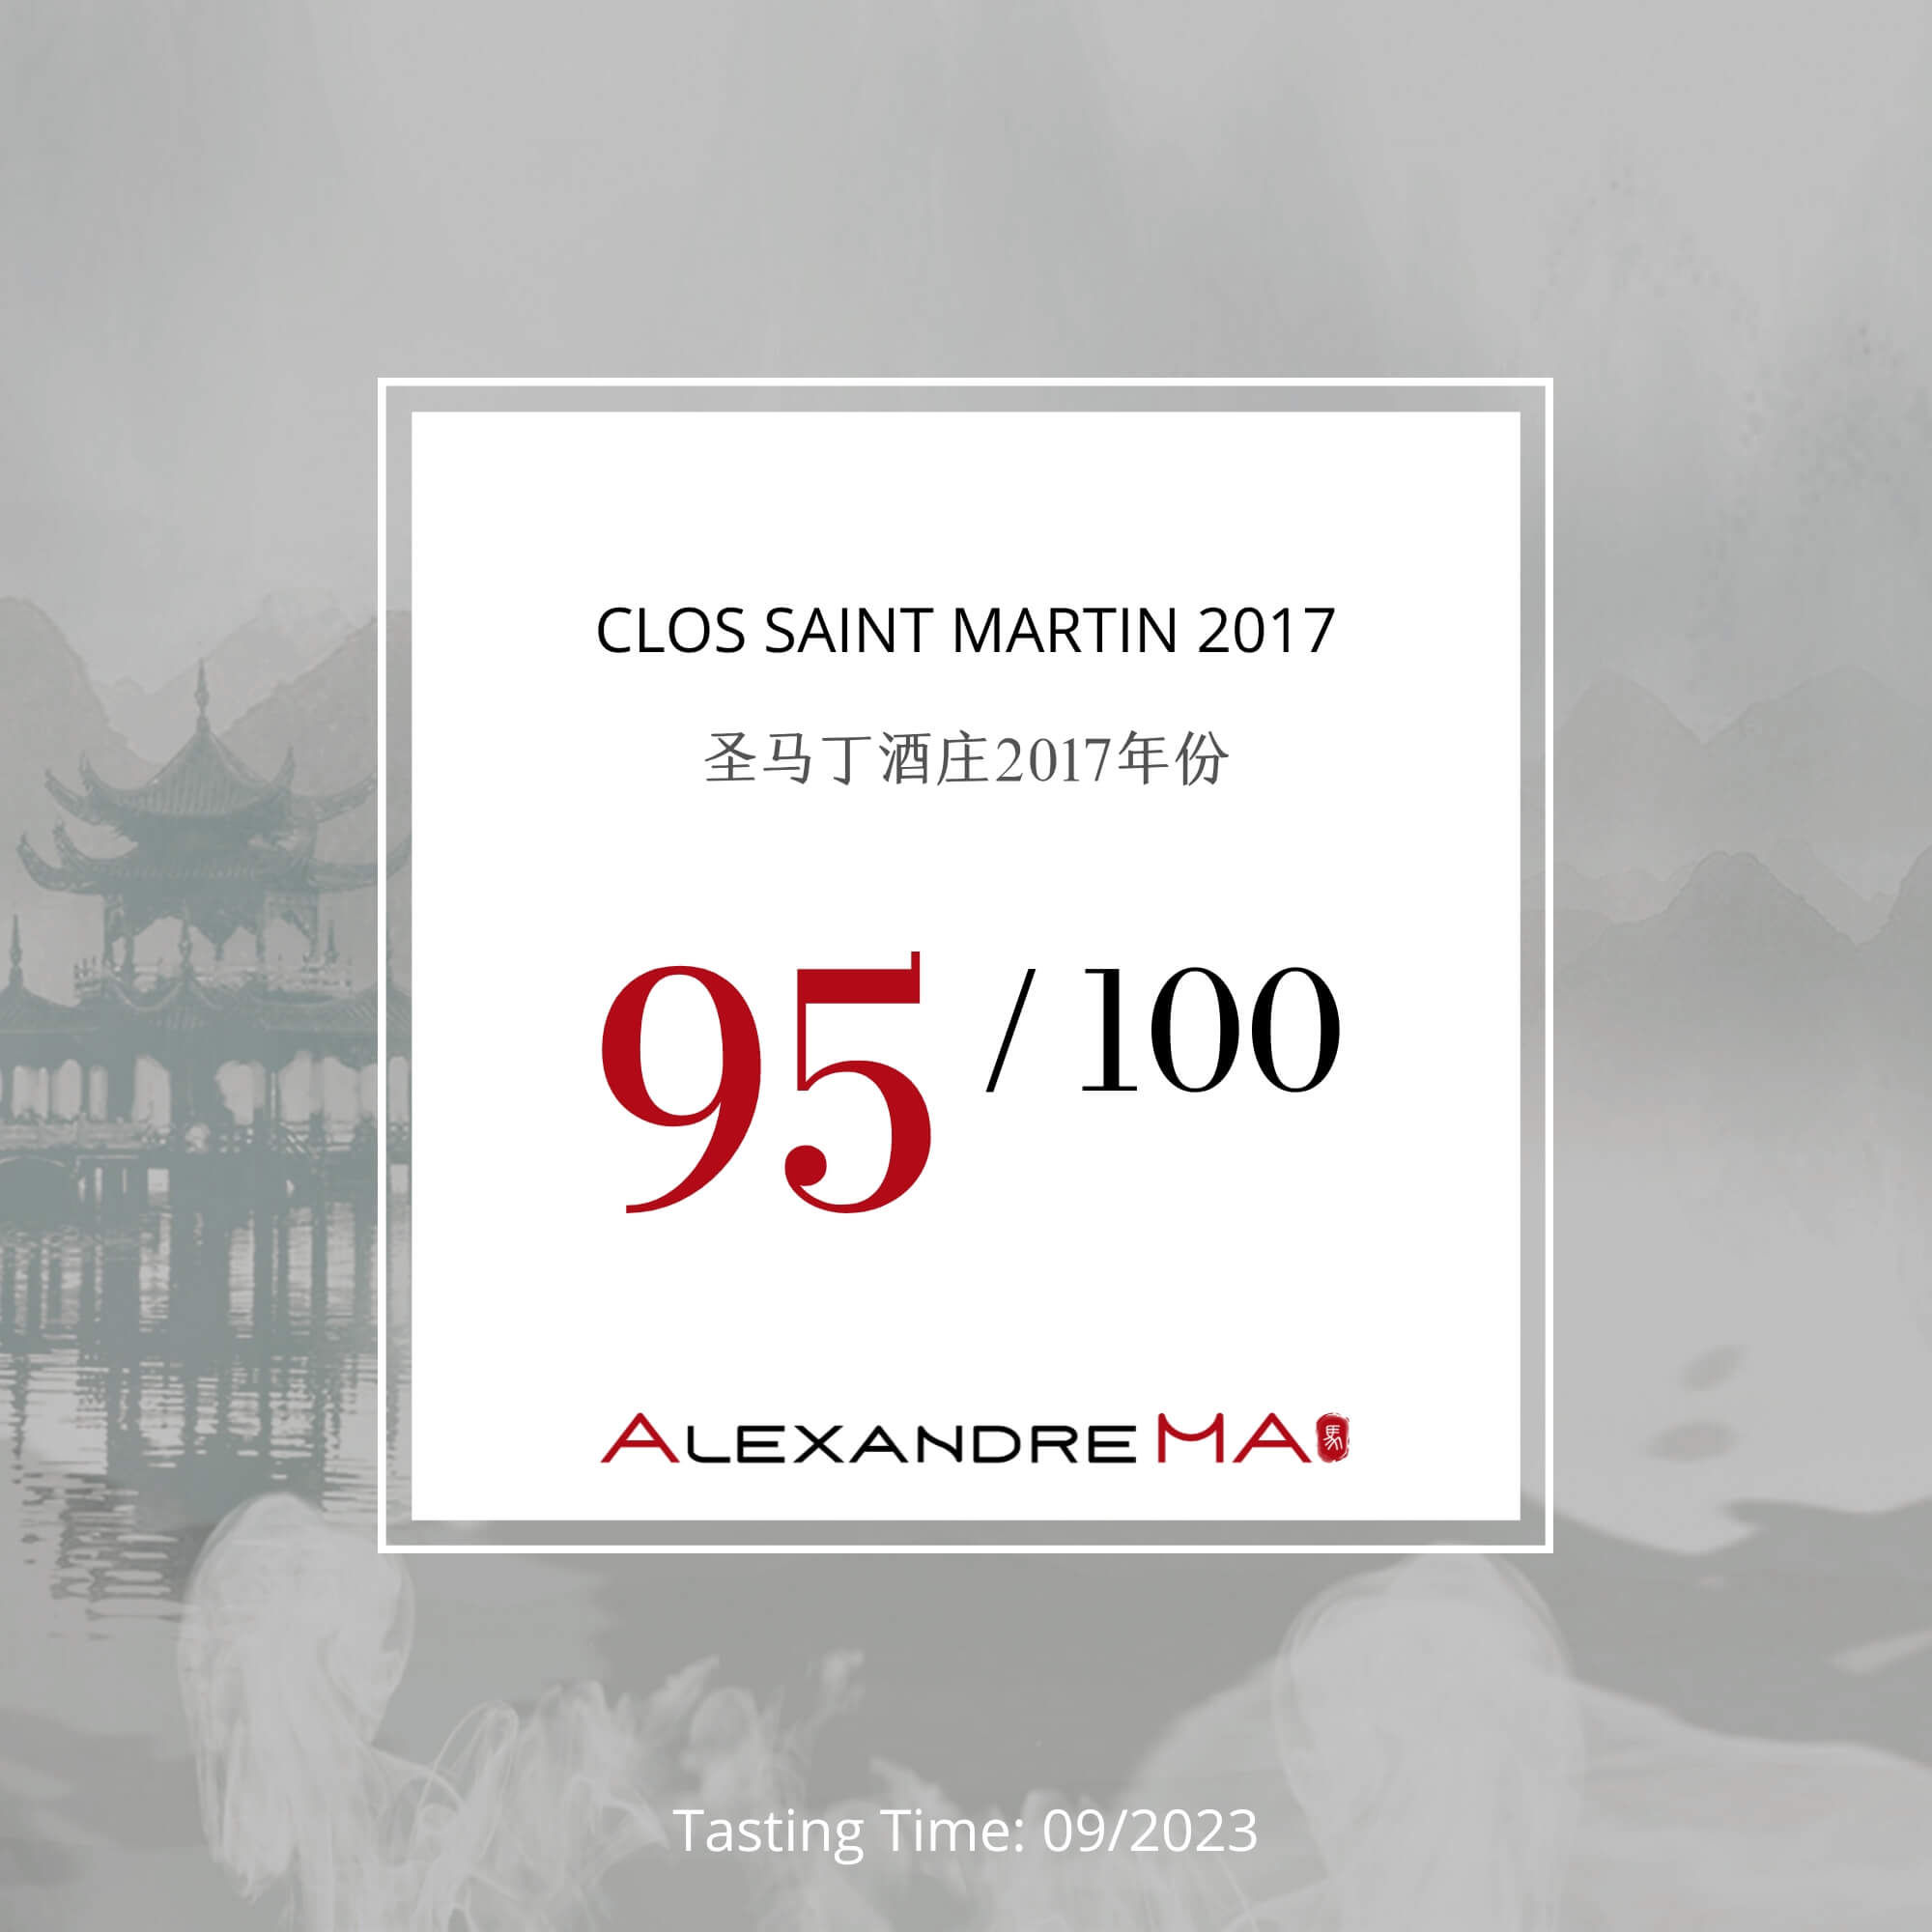 Clos Saint Martin 2017 圣马丁酒庄 - Alexandre Ma